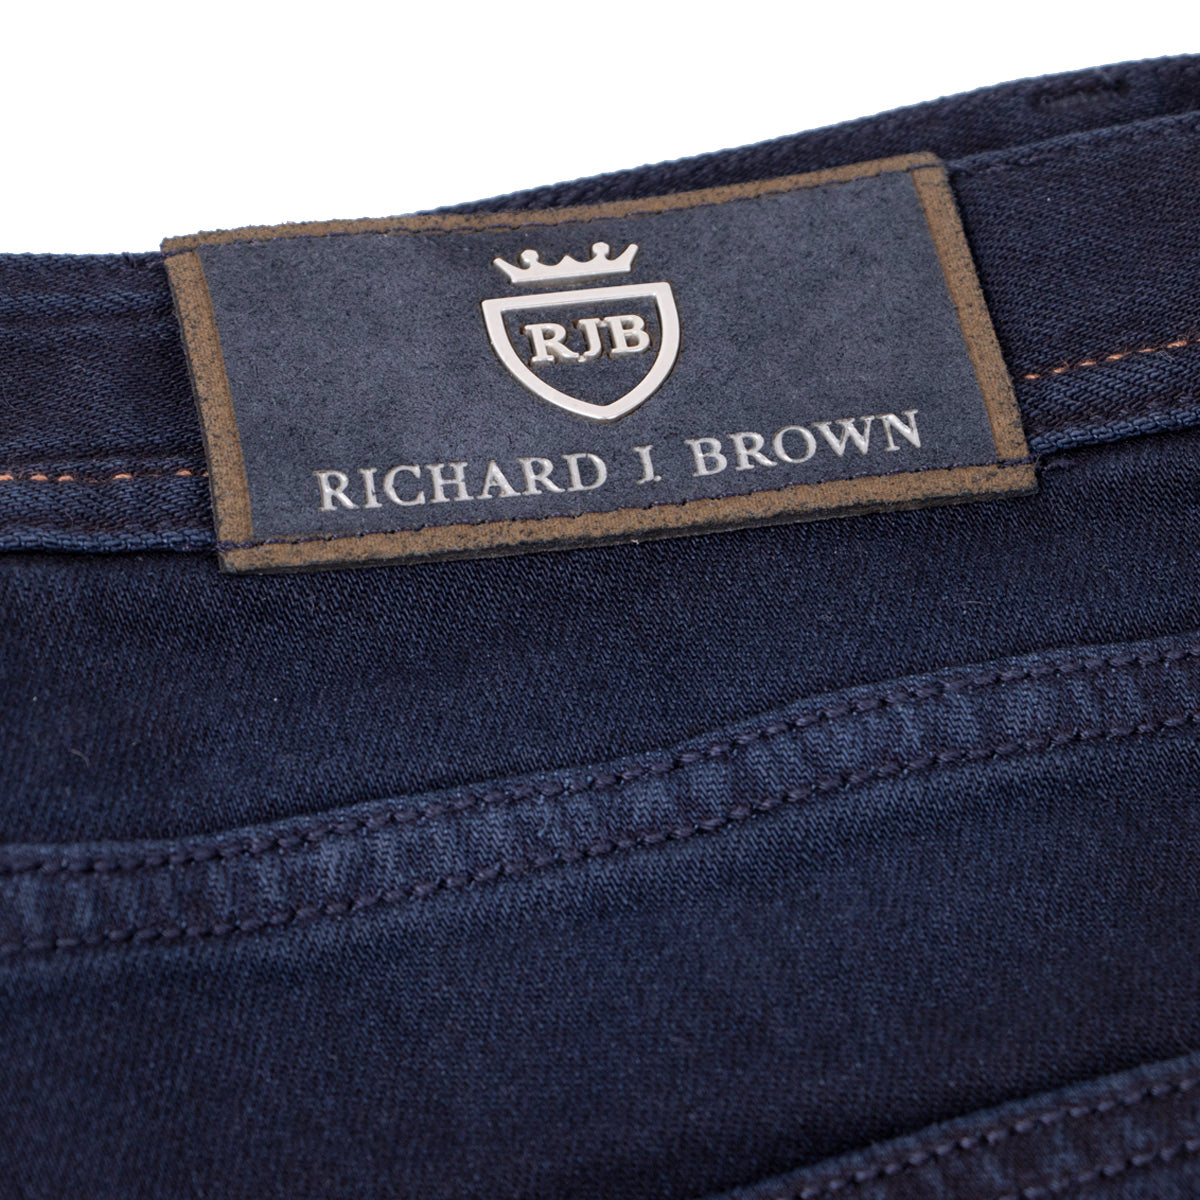 Indigo Denim 'Milano' Regular Fit Jeans  Richard J. Brown   